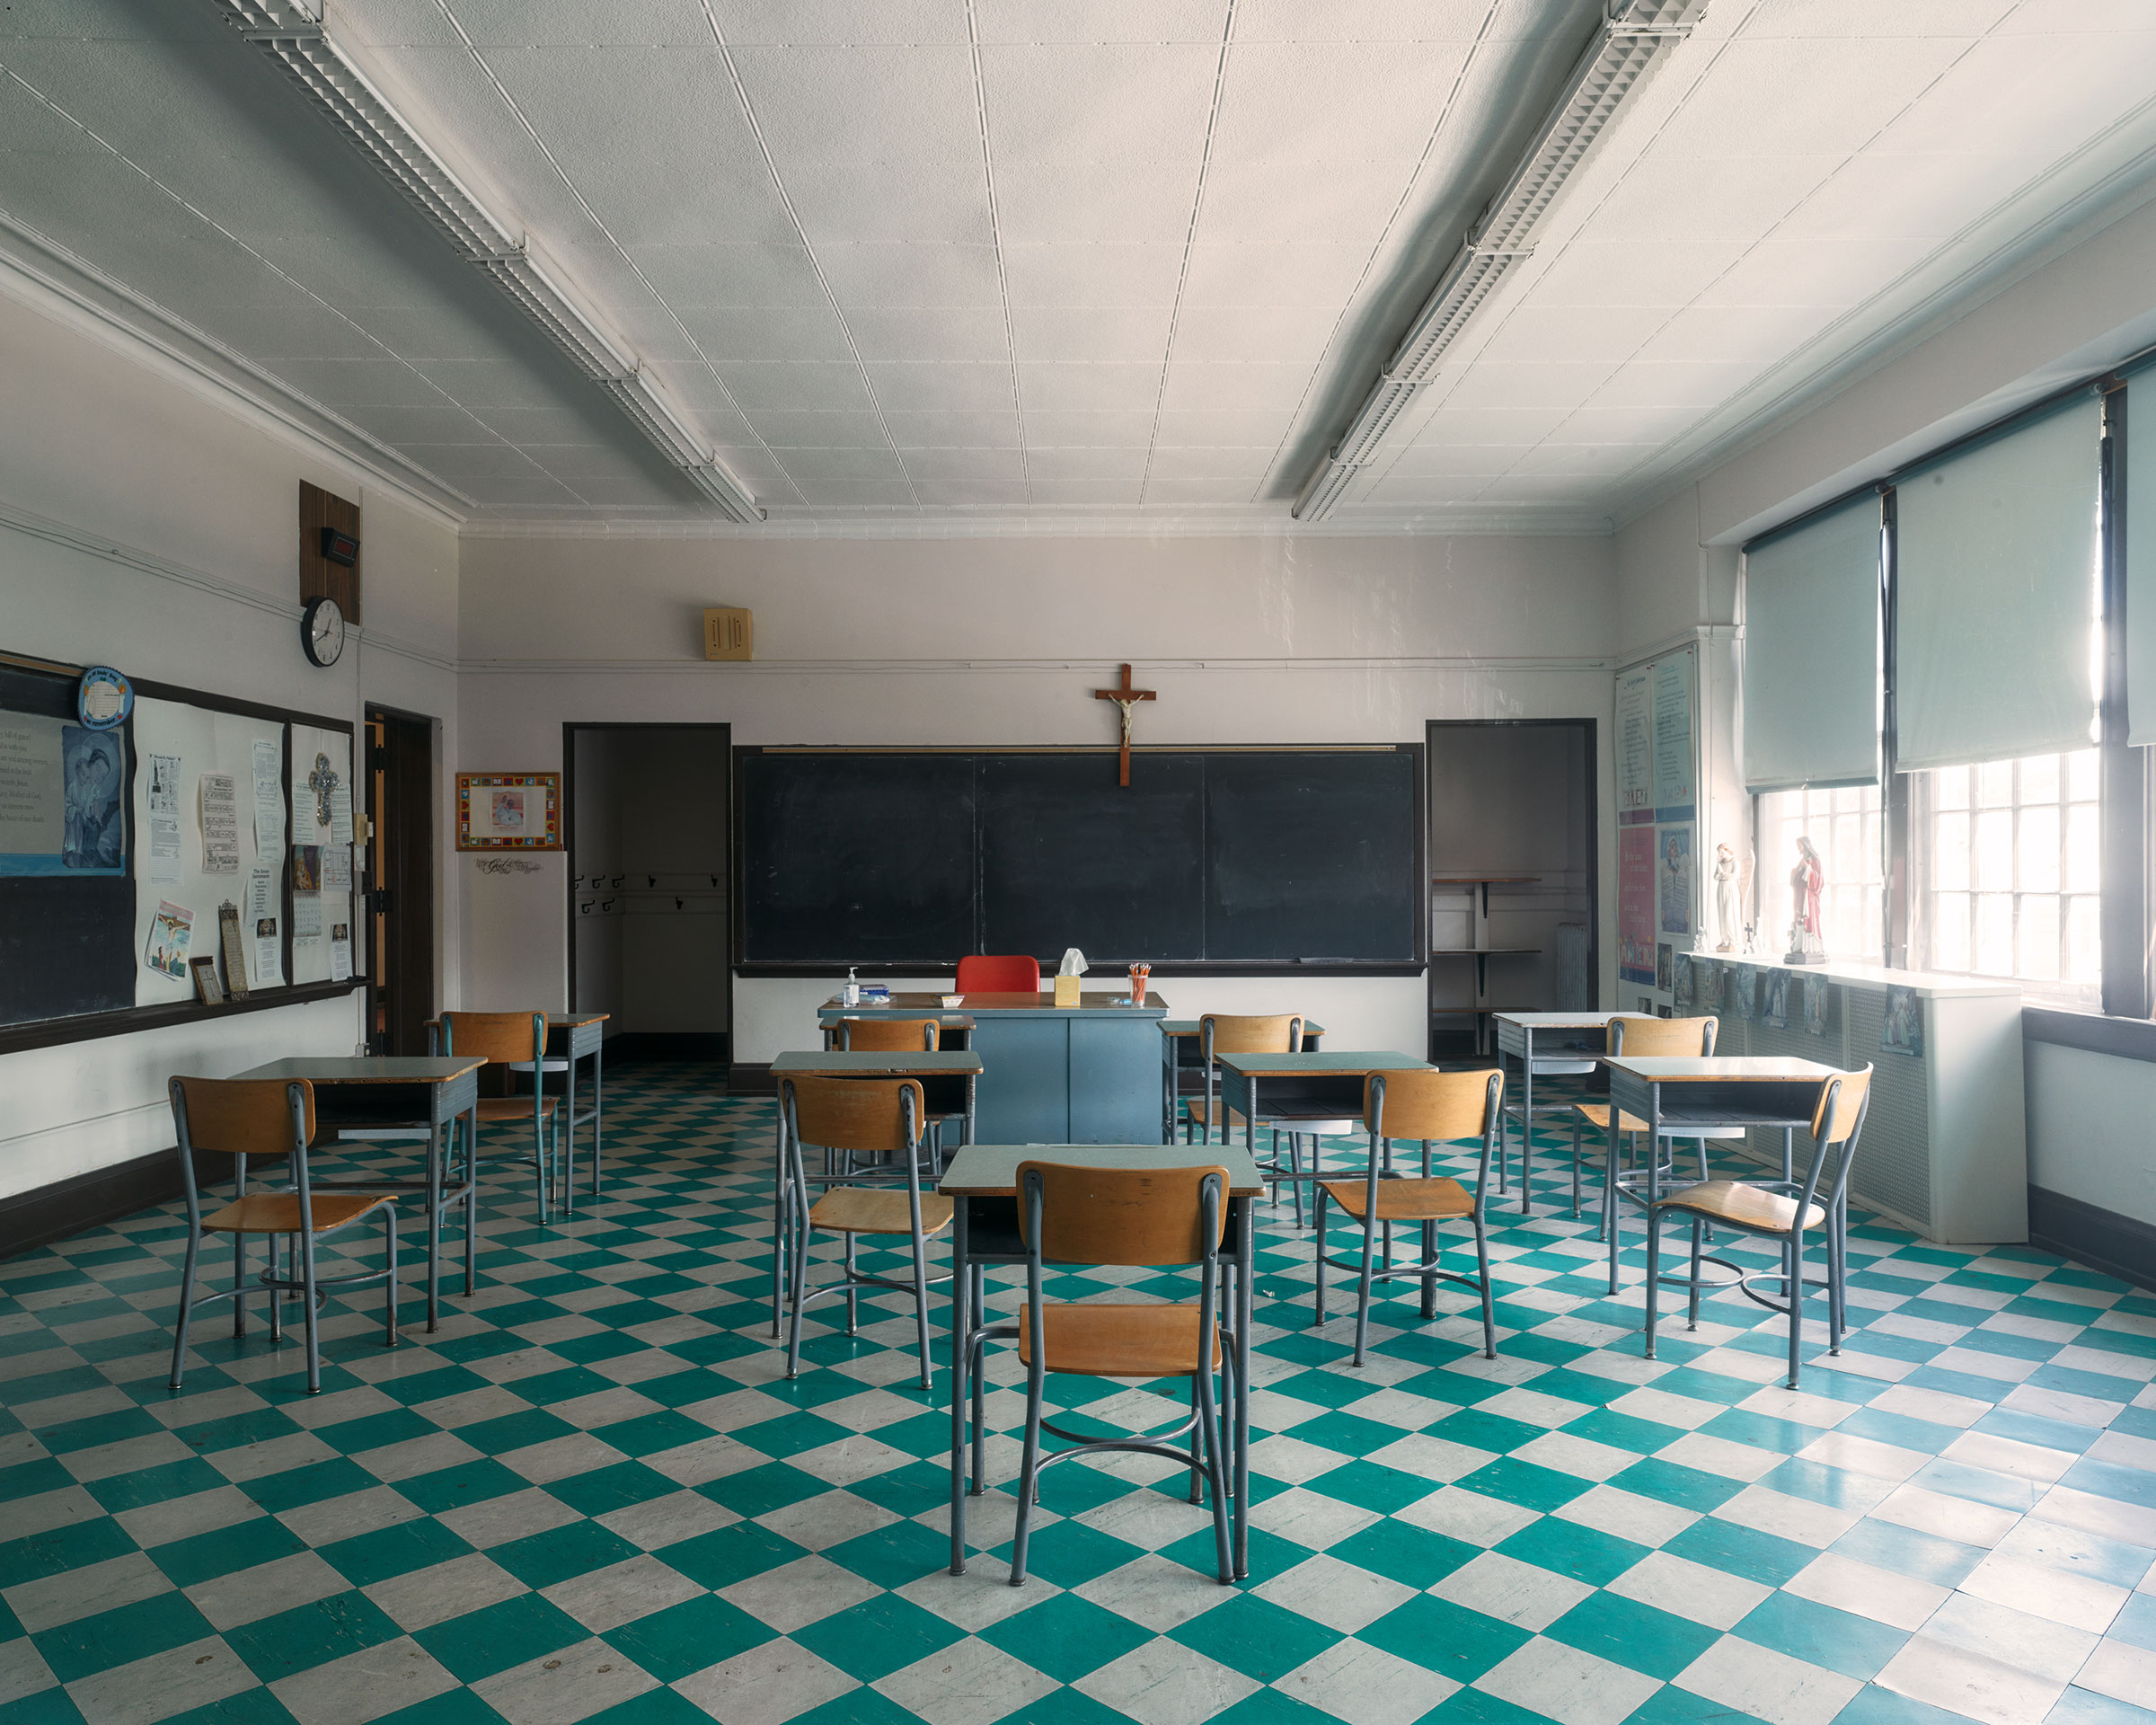 A classroom inside the temporarily closed school at the Annunciaion Church. (Jason Koxvold for TIME)